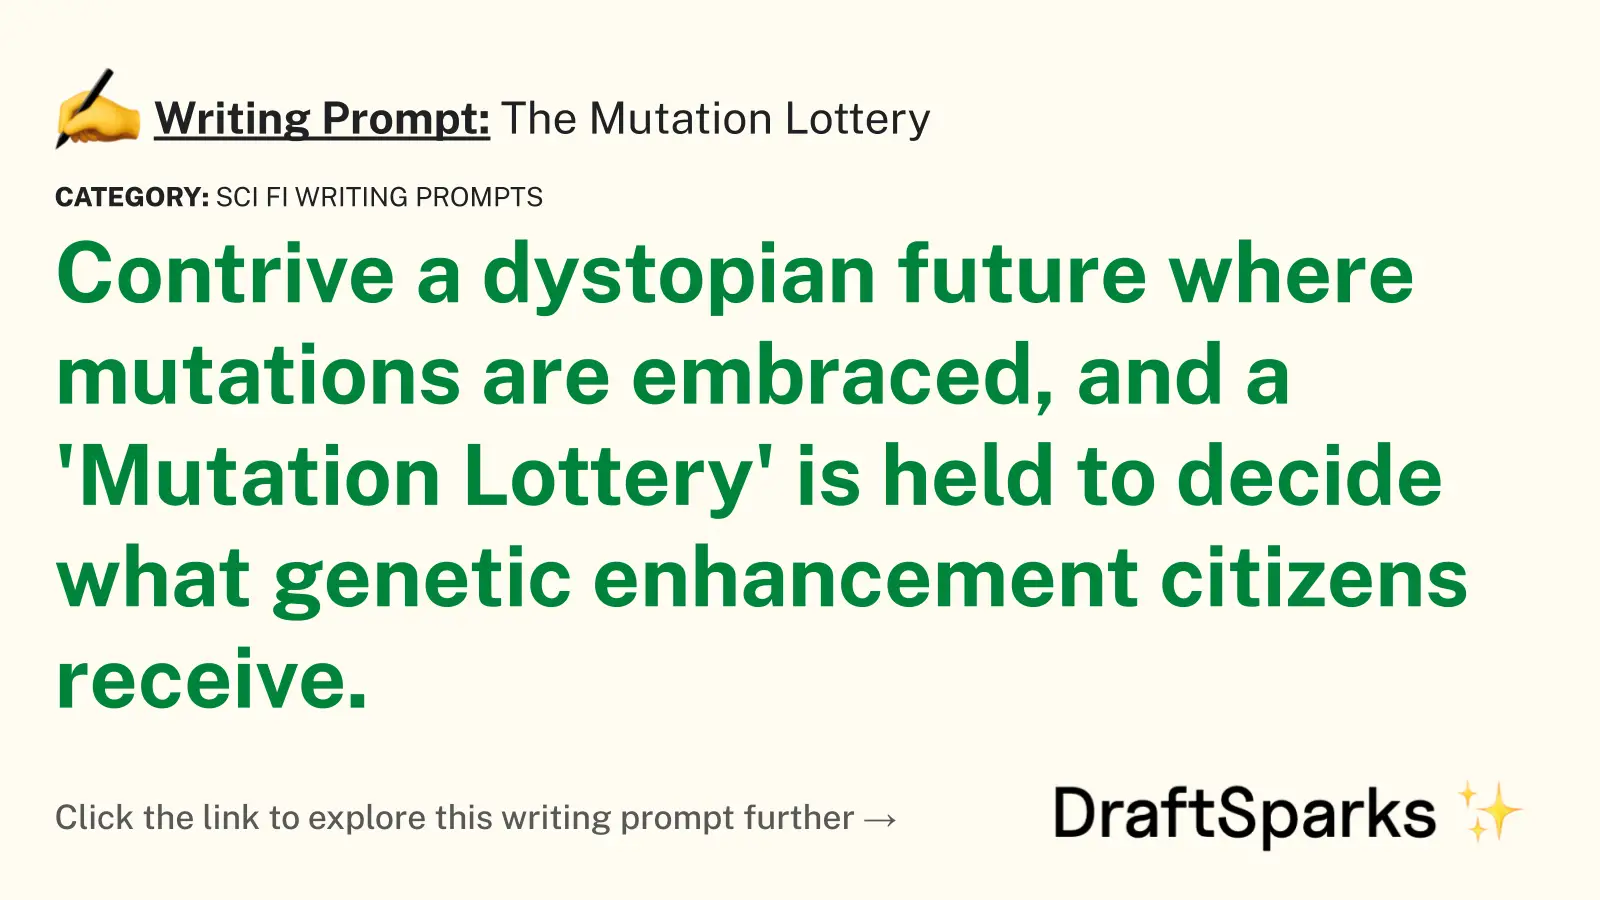 The Mutation Lottery